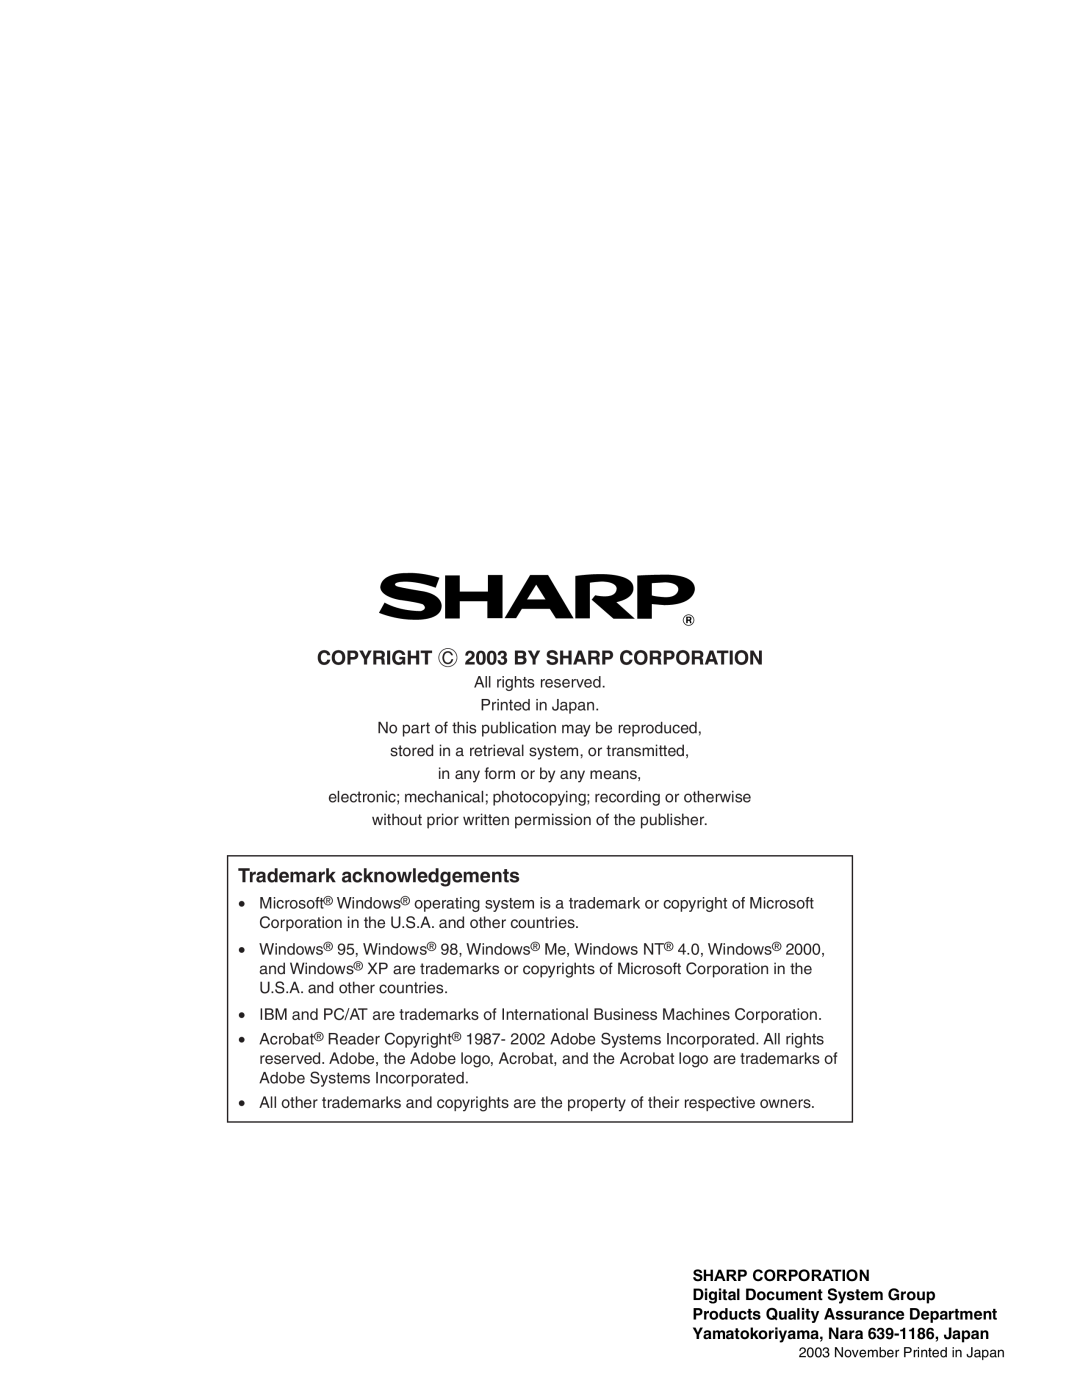 Sharp AL-1645CS, AL-1641CS Trademark acknowledgements, Sharp Corporation, Yamatokoriyama, Nara 639-1186, Japan 